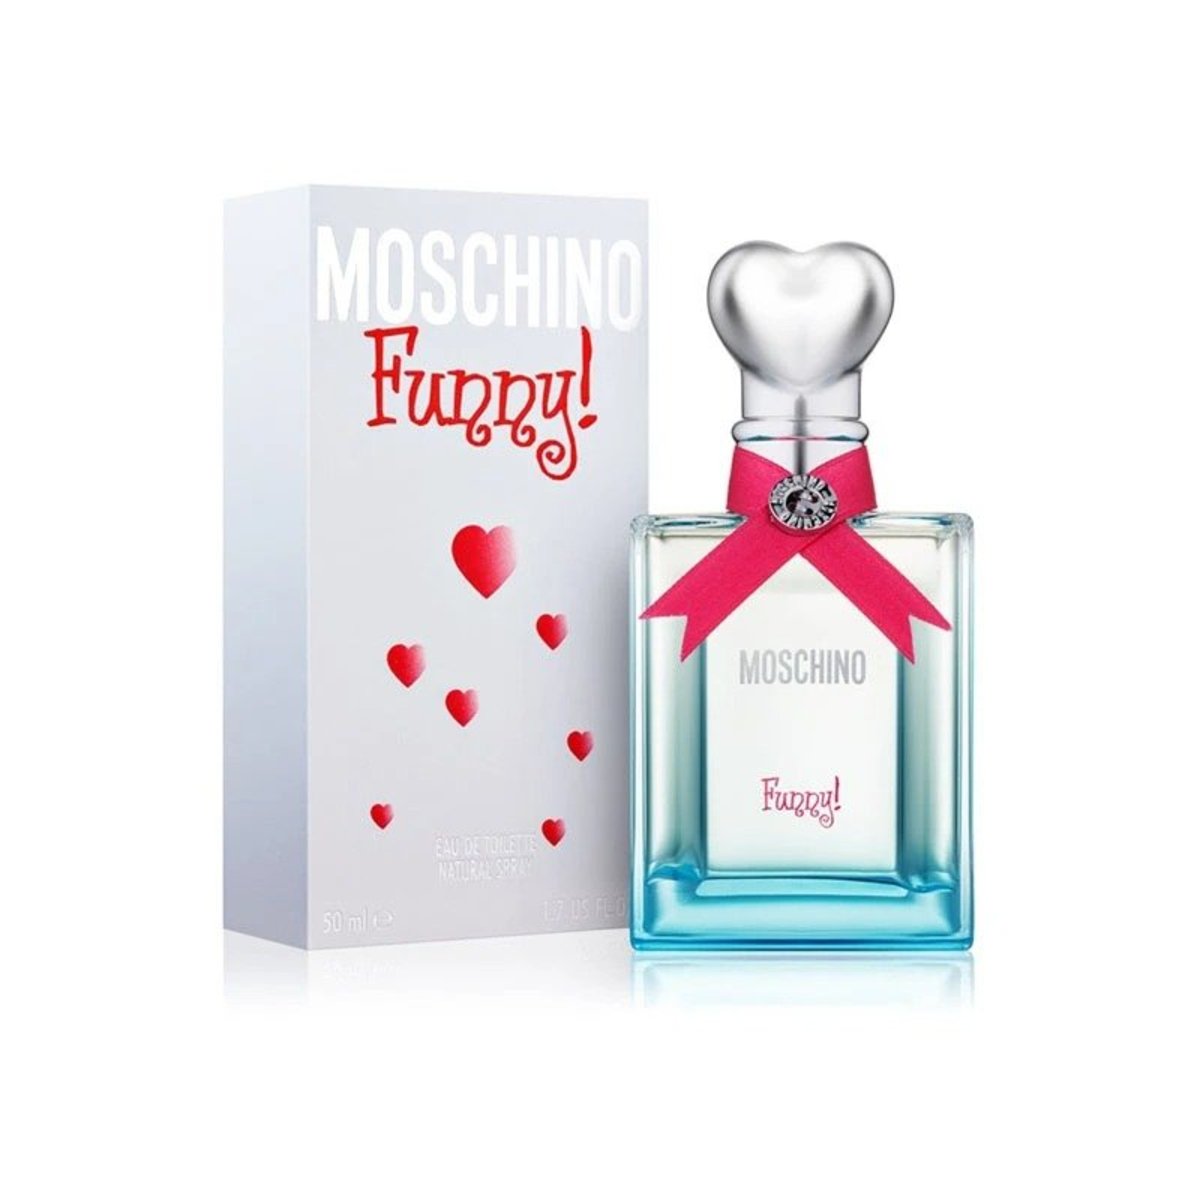 moschino funny perfume